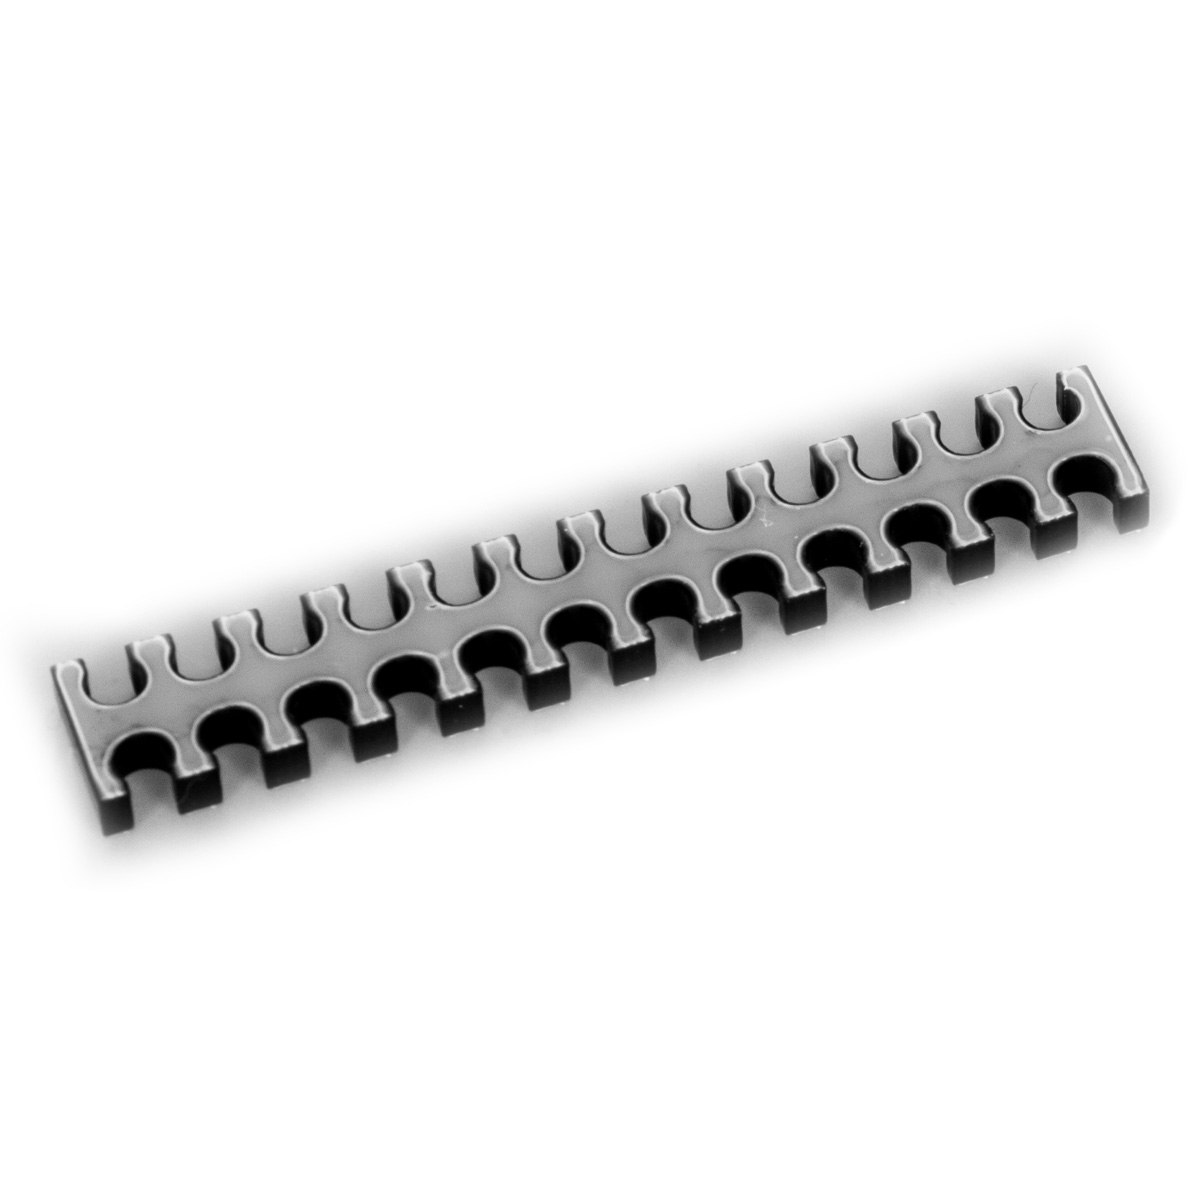 TechForge 24 Slot Cable Comb (Small) 3mm - Black